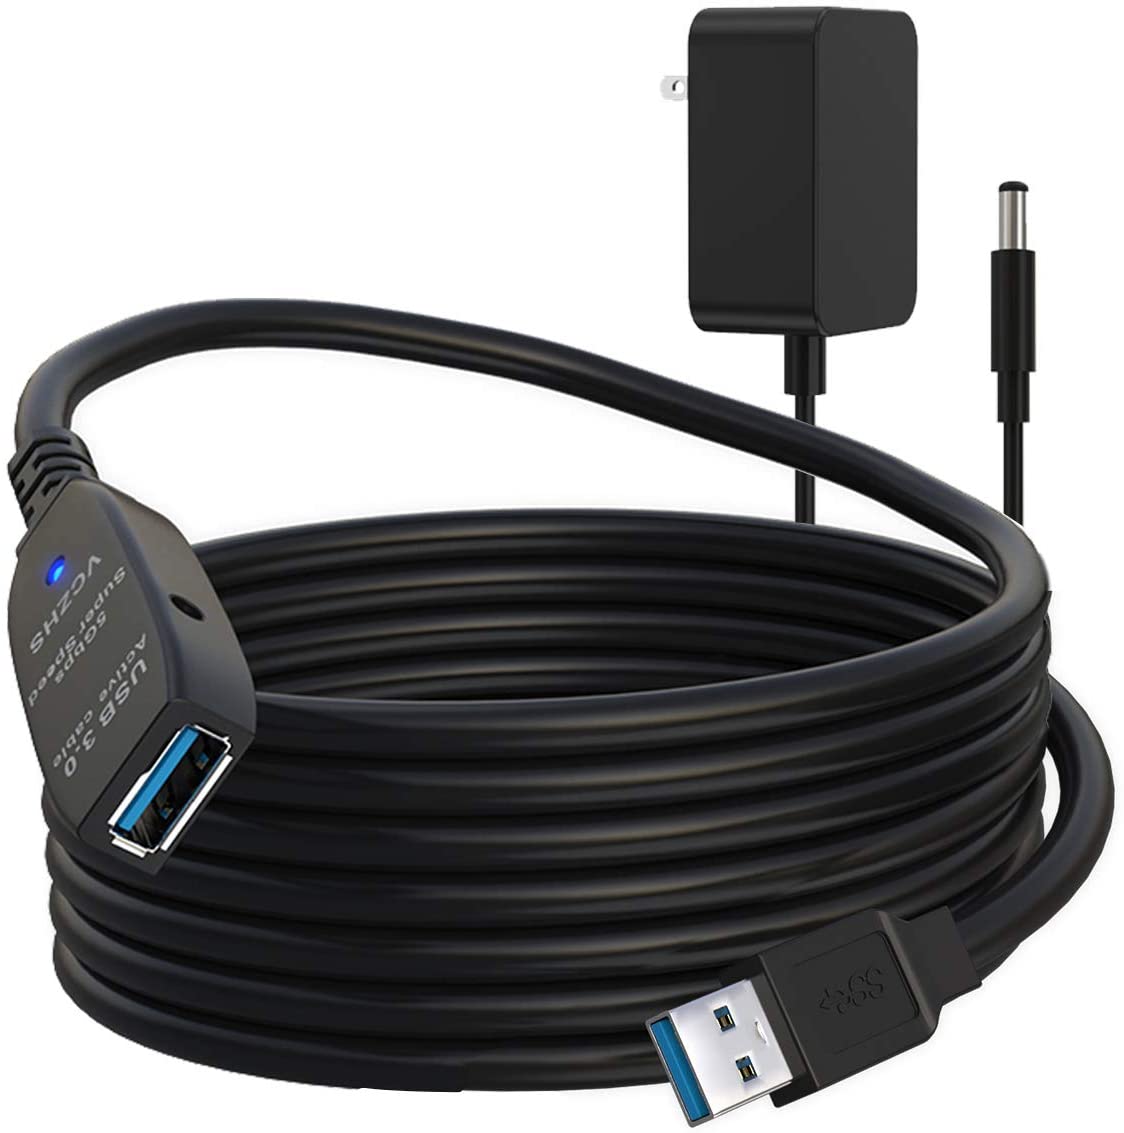 Cable de extensión 25 pies USB 3.0 repetidor activo Cable incorporado de señal Booster Chipsets